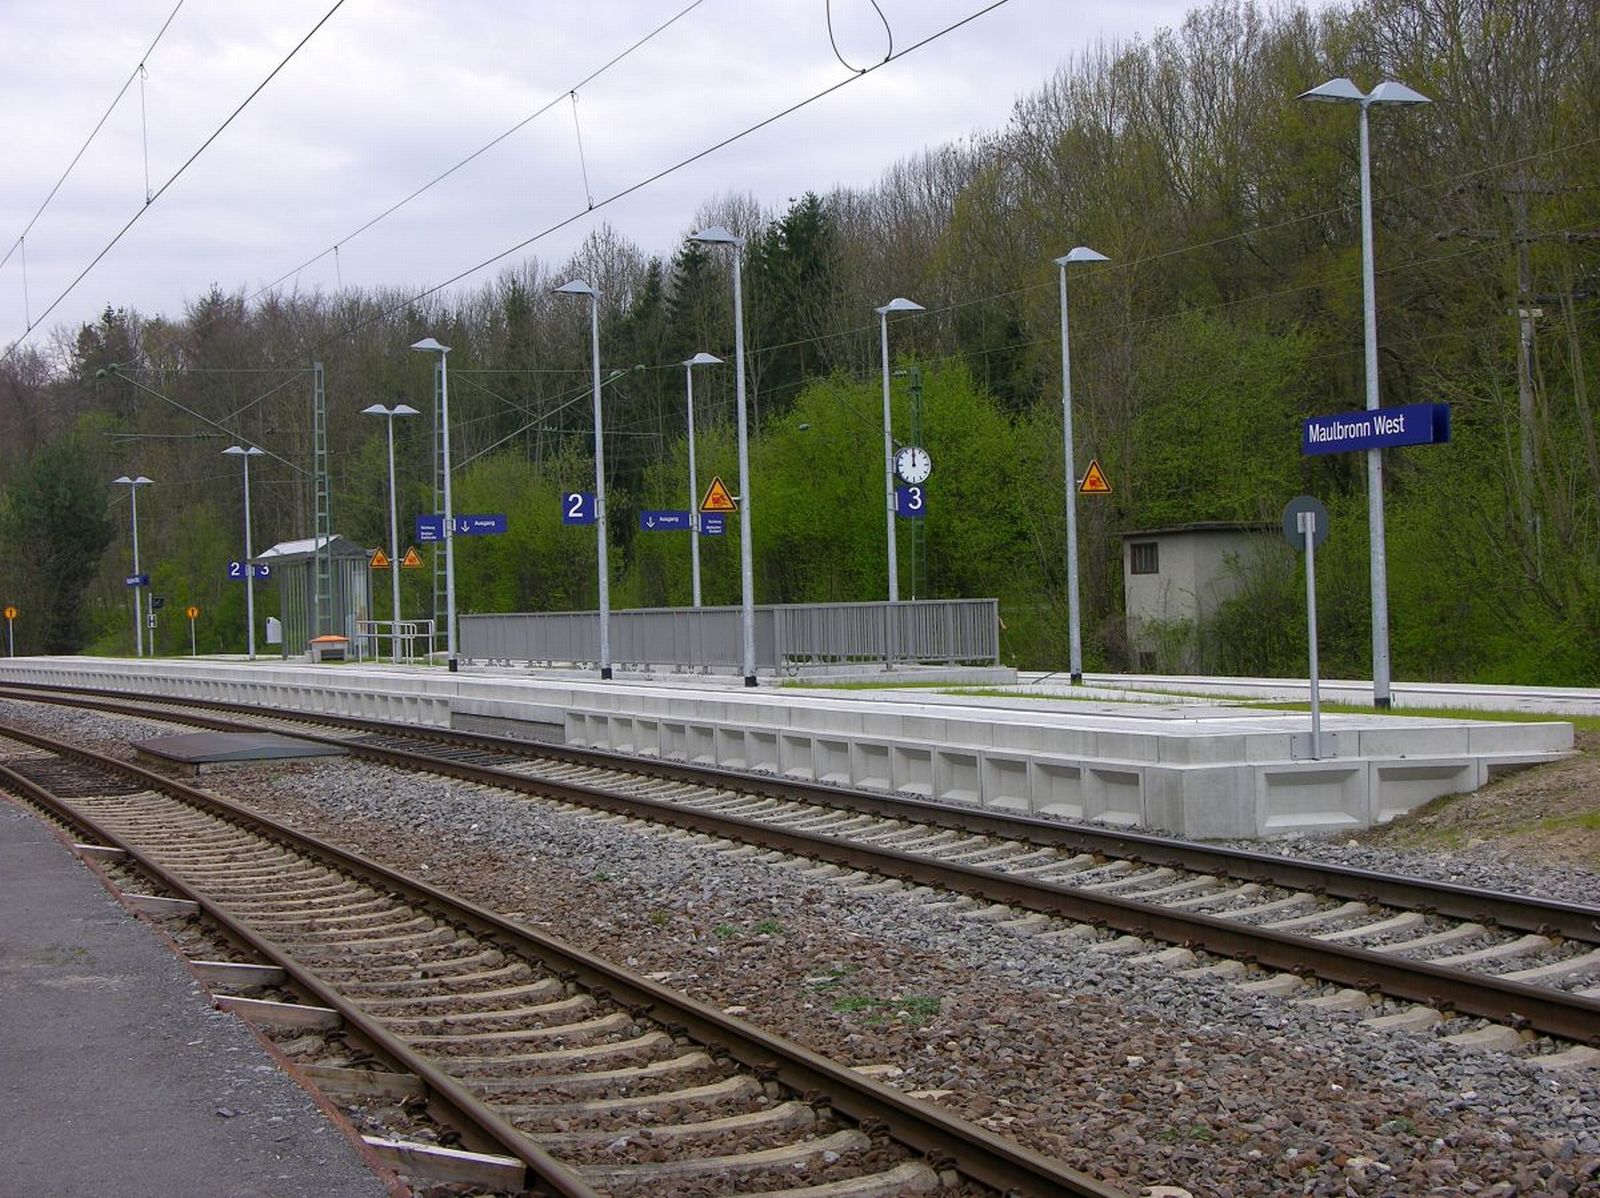  Gute Anbindung, Stadtbahn-Haltestelle Maulbronn West 